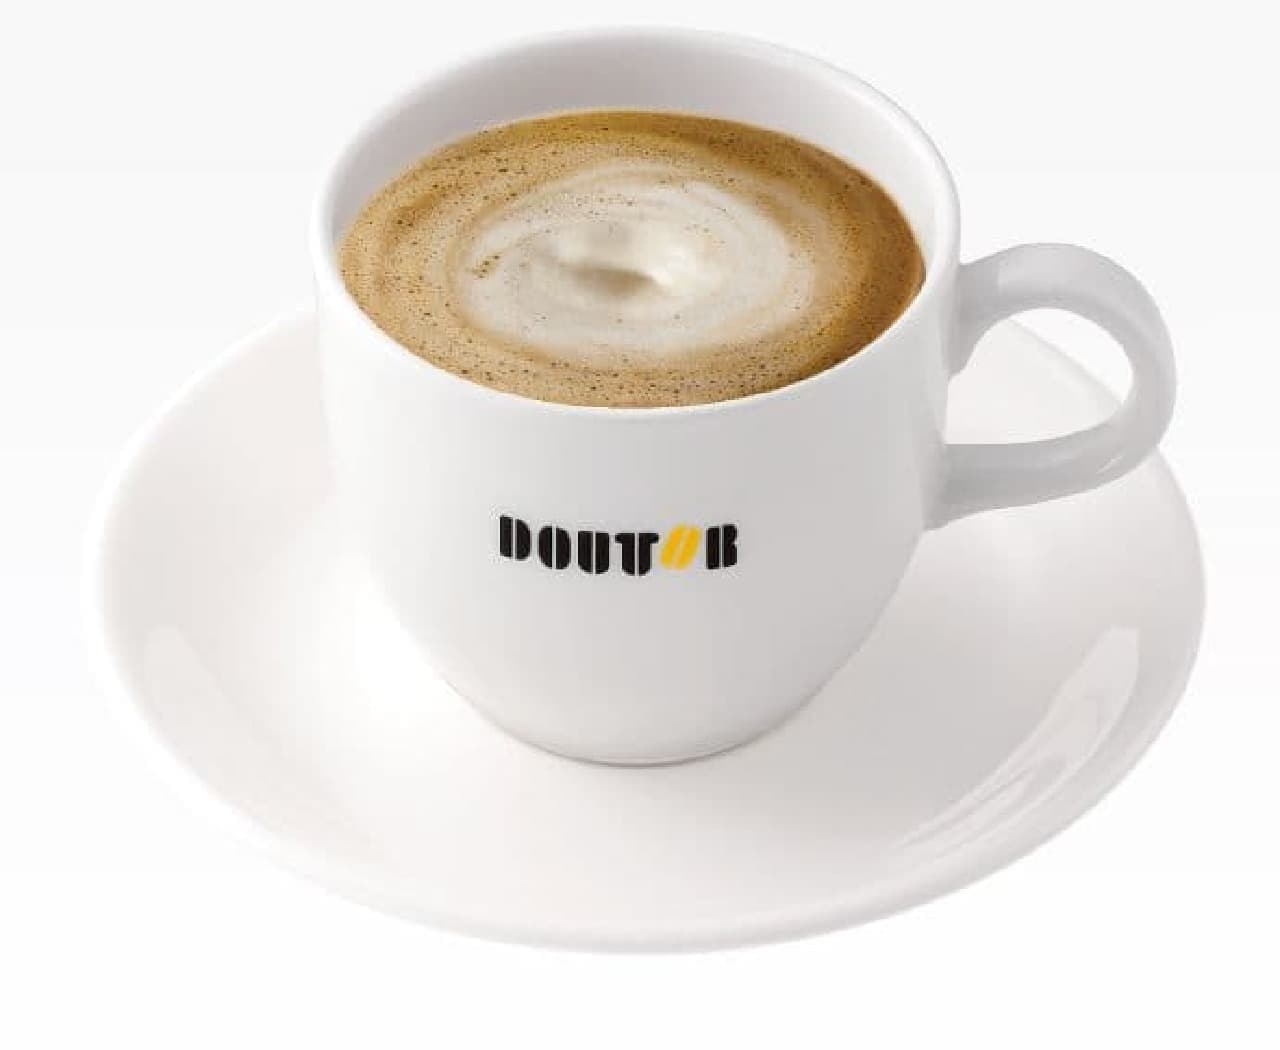 Doutor - Luxurious hojicha latte with Kyoto-grown first-grade green tea.